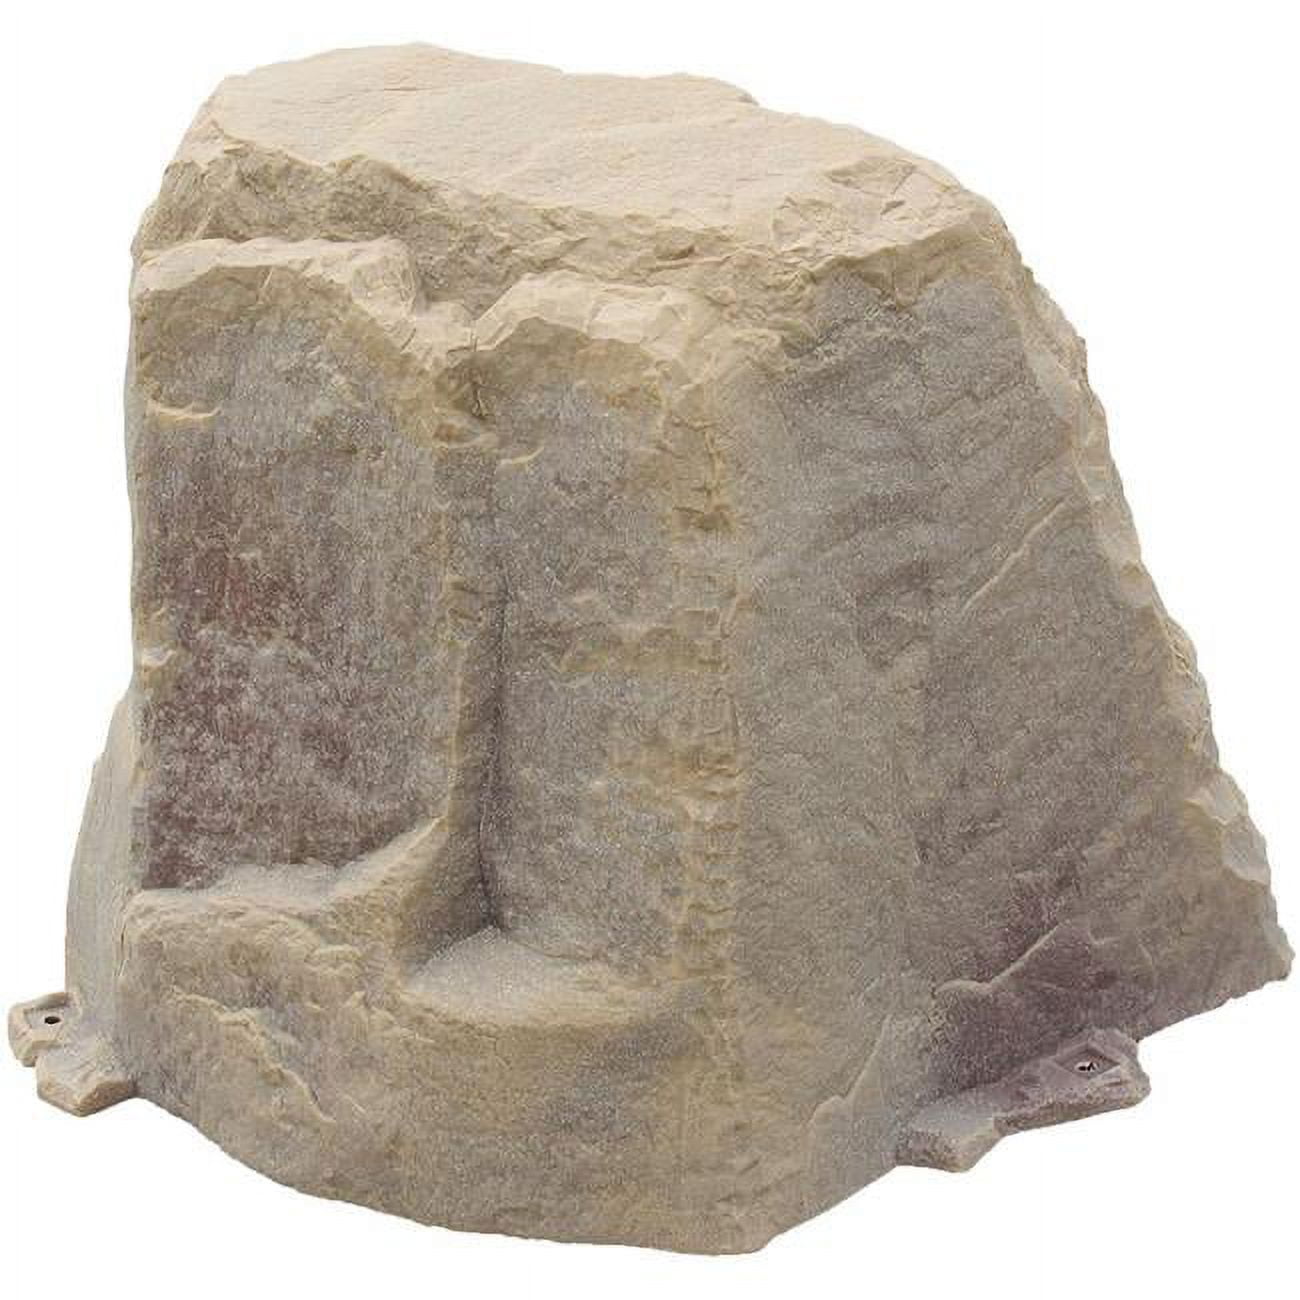 123-ss Artificial Rock, Sandstone